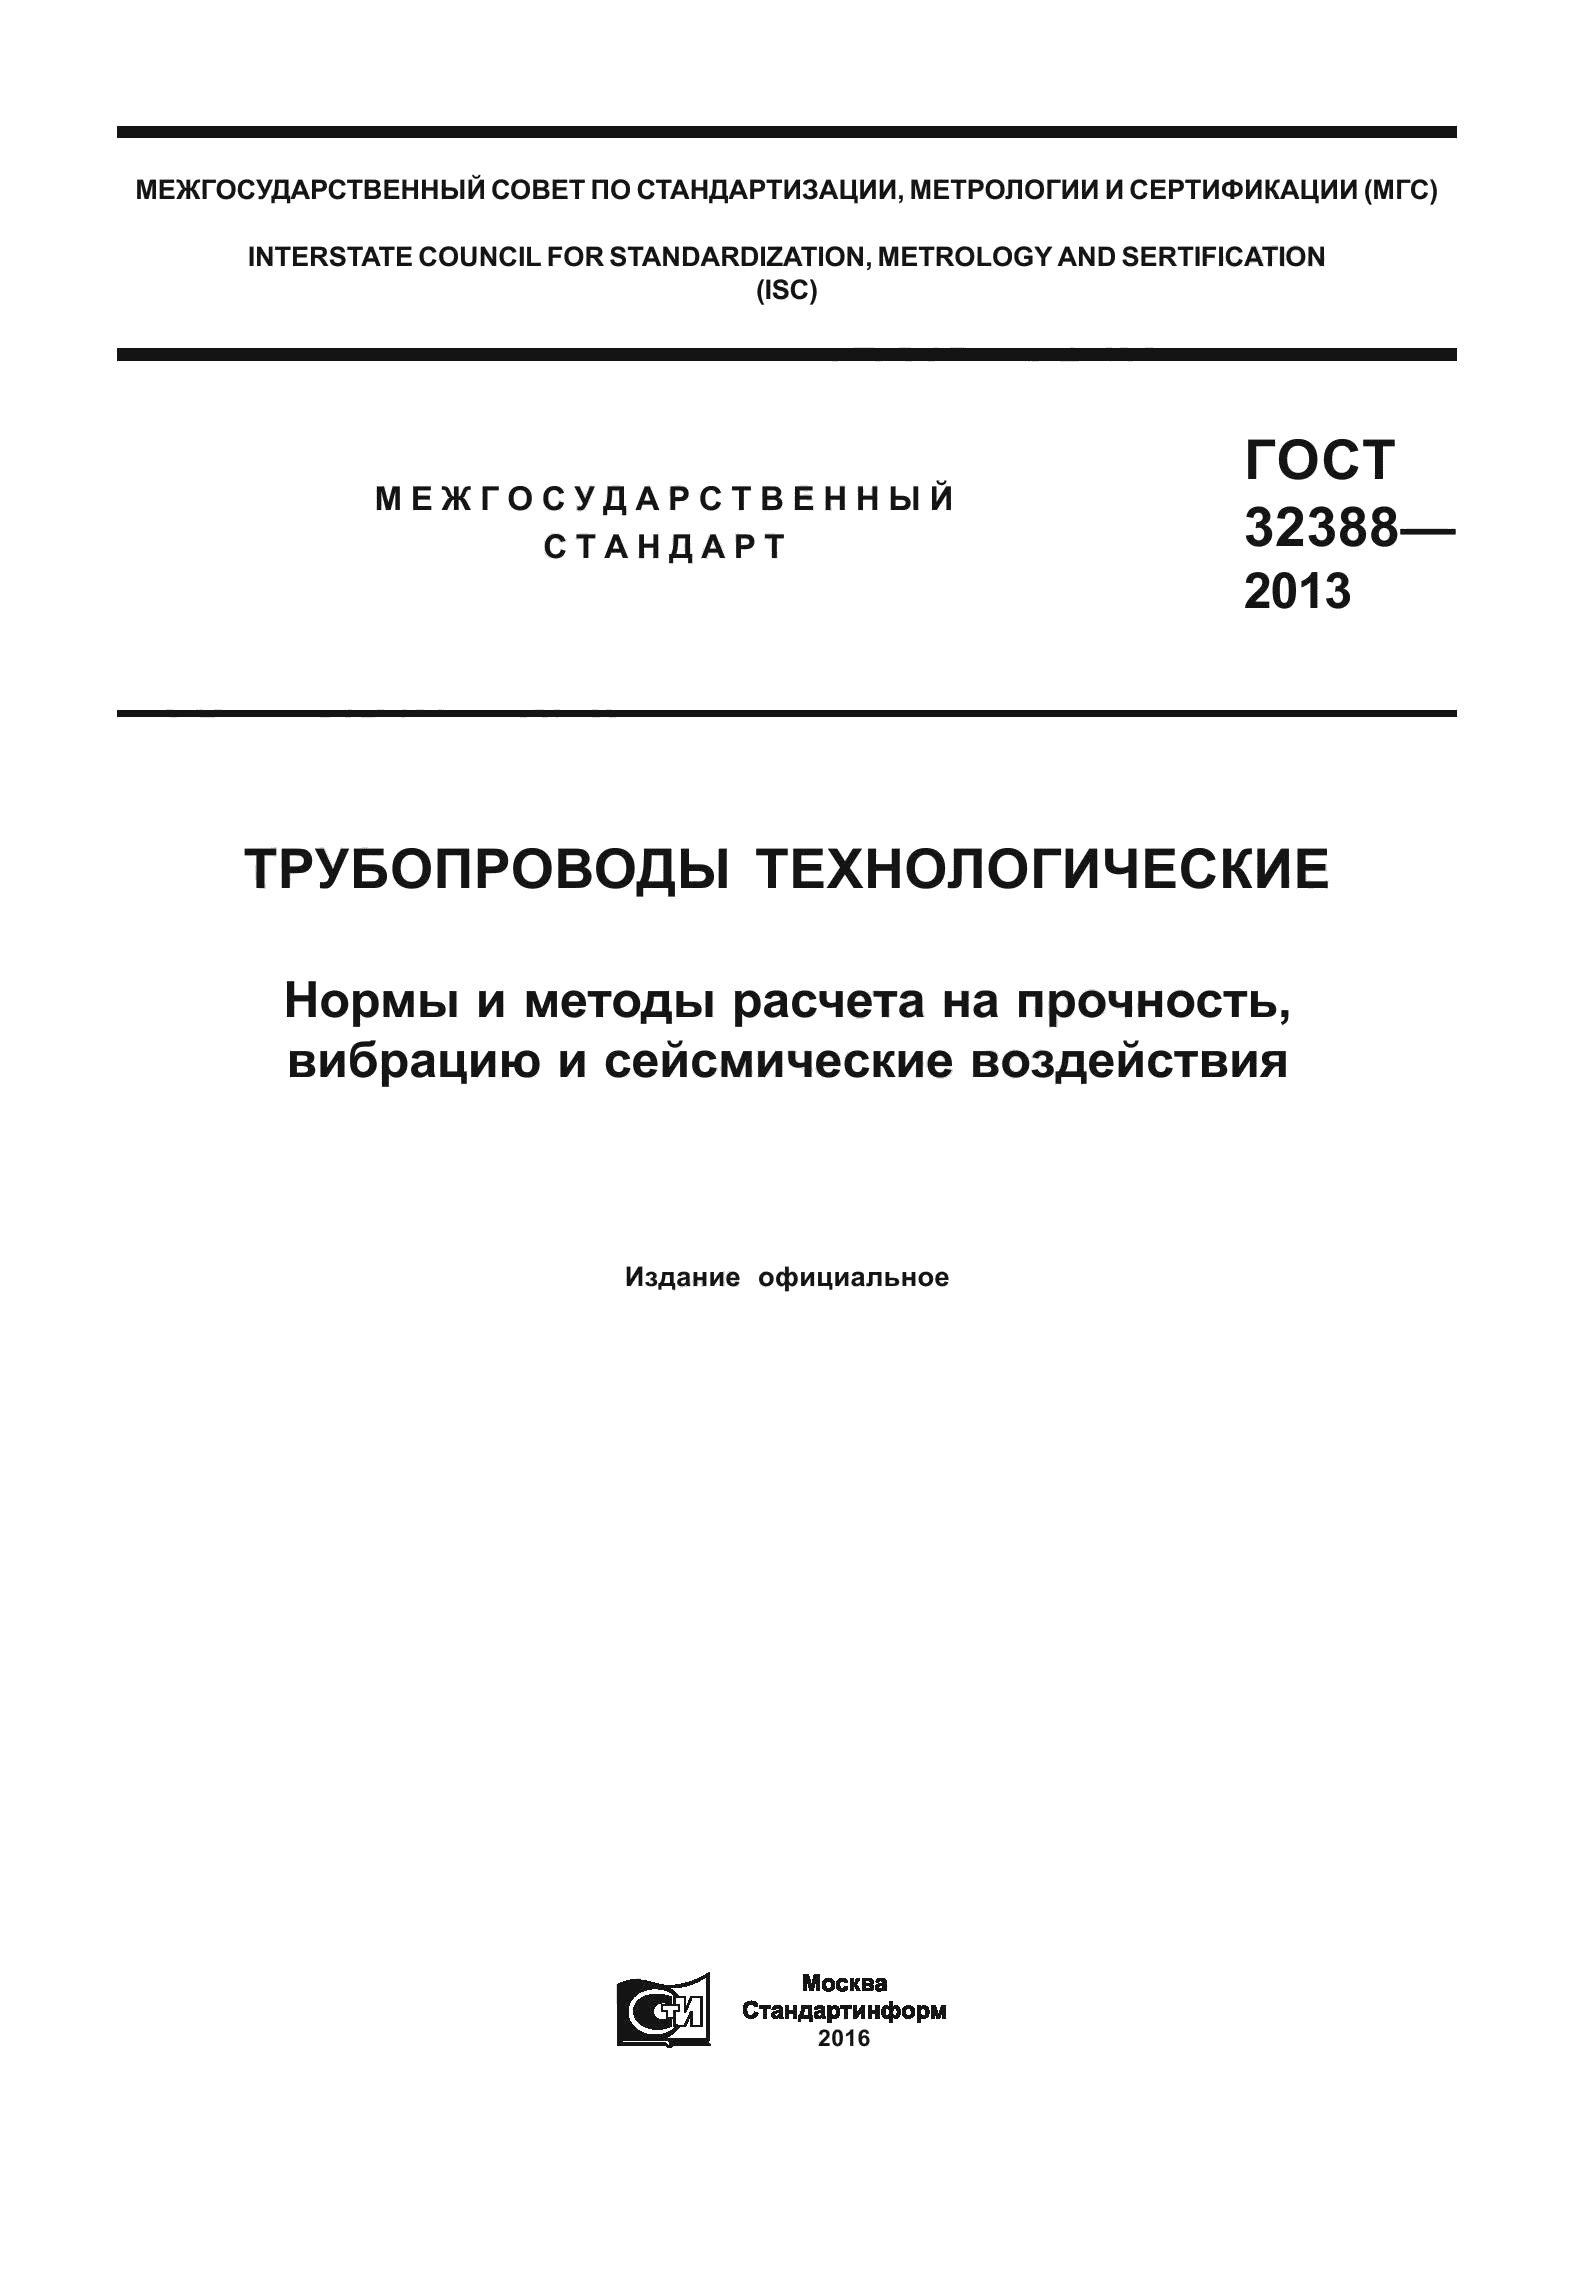 ГОСТ 32388-2013